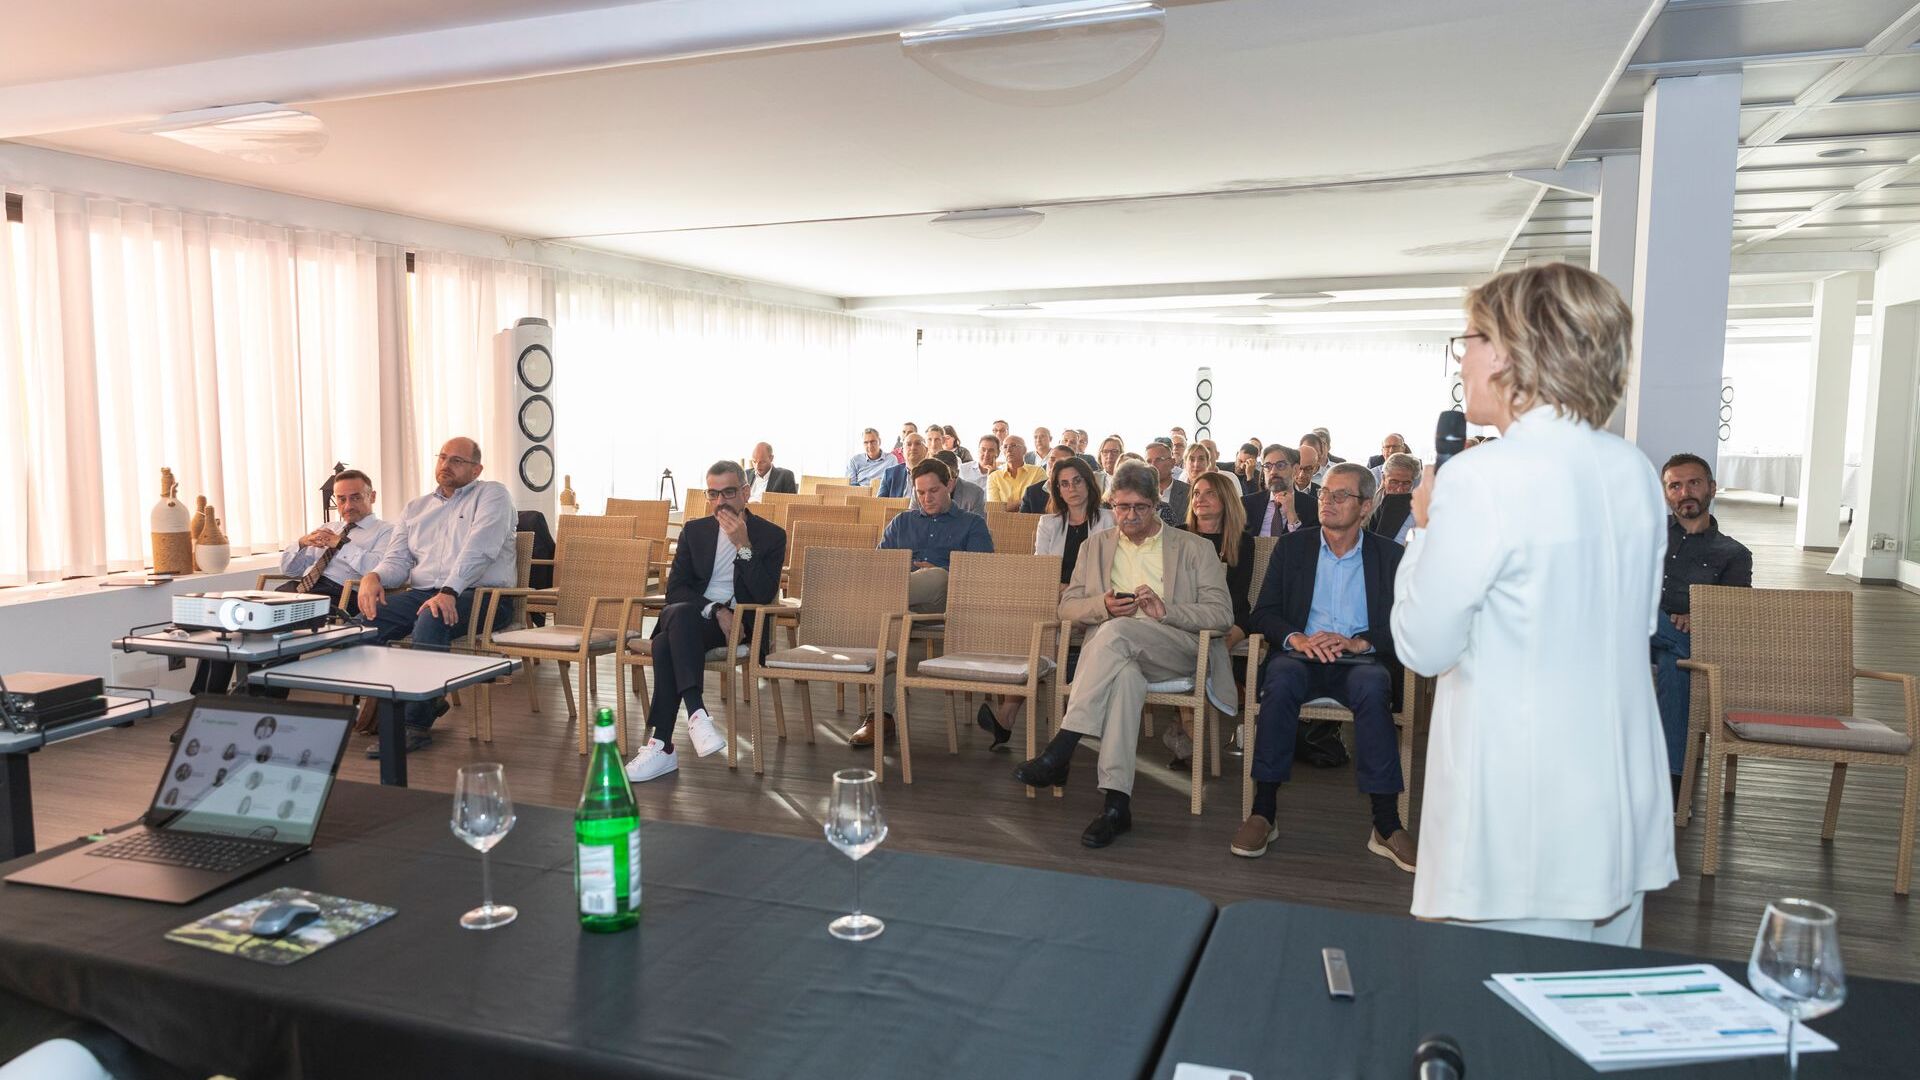 Cristina Giotto ated-ICT Ticino şirkətinin prezidenti seçildi